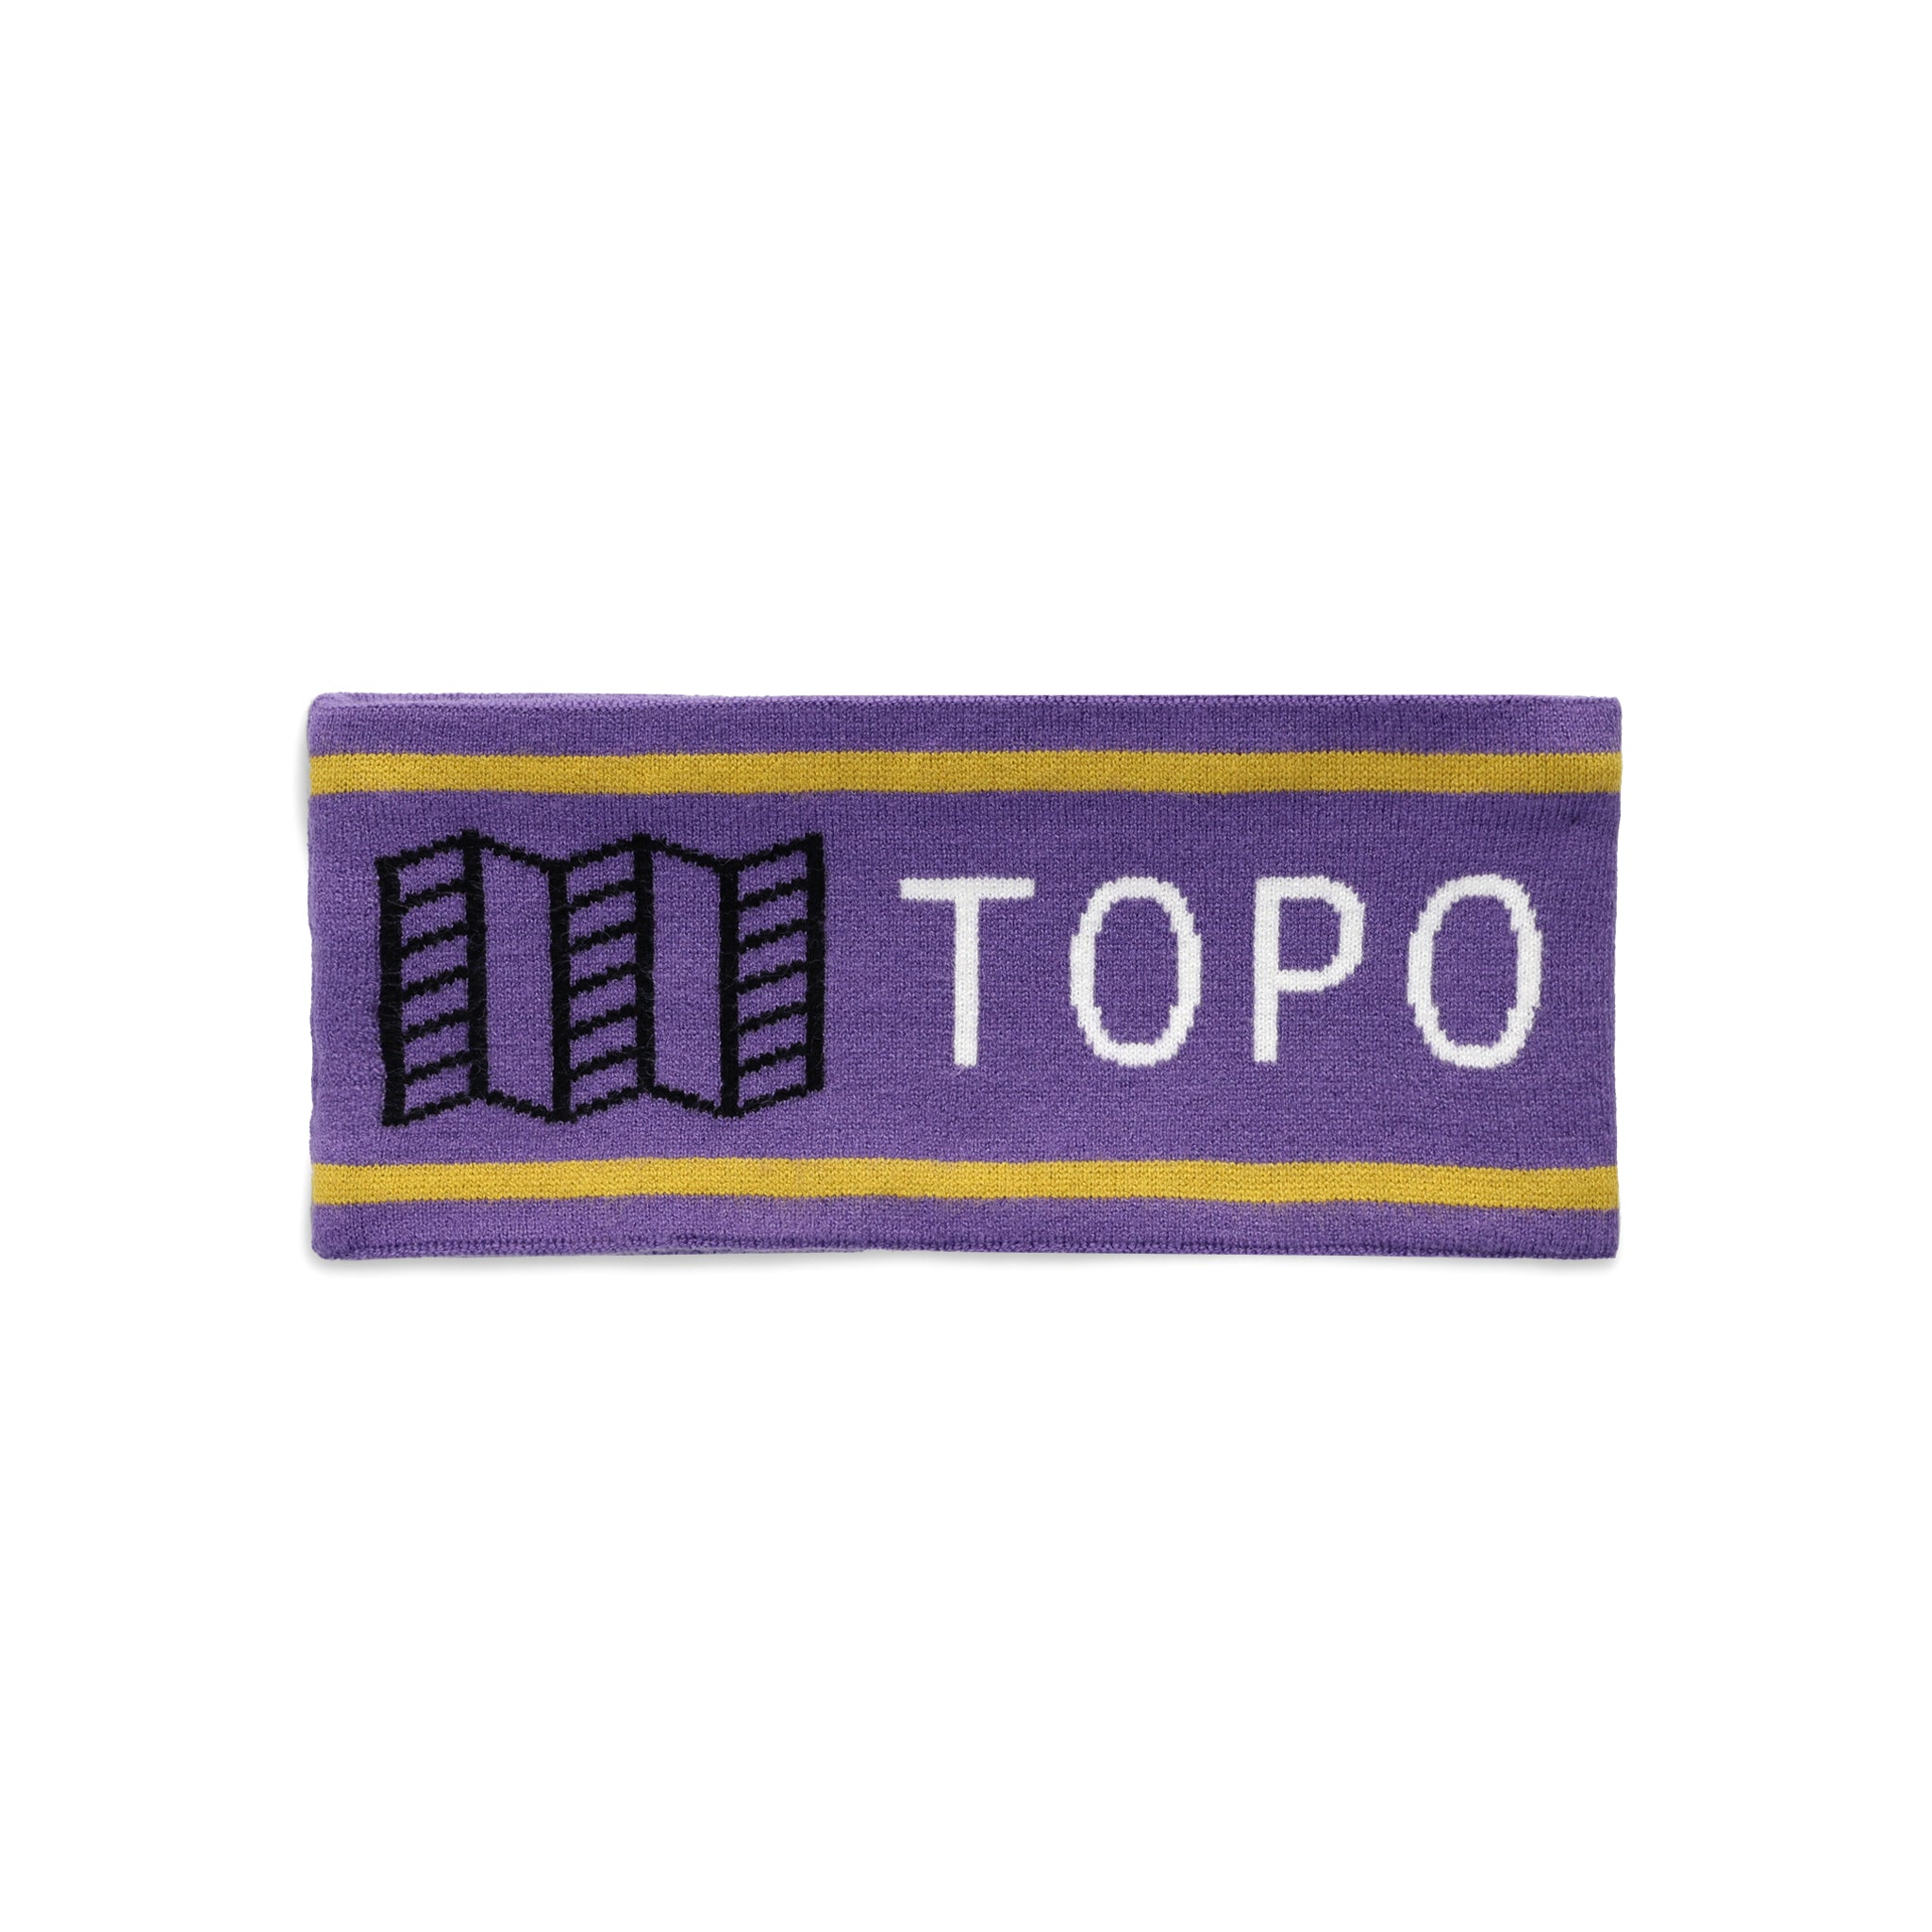 Berg-Stirnband | Topo Designs 